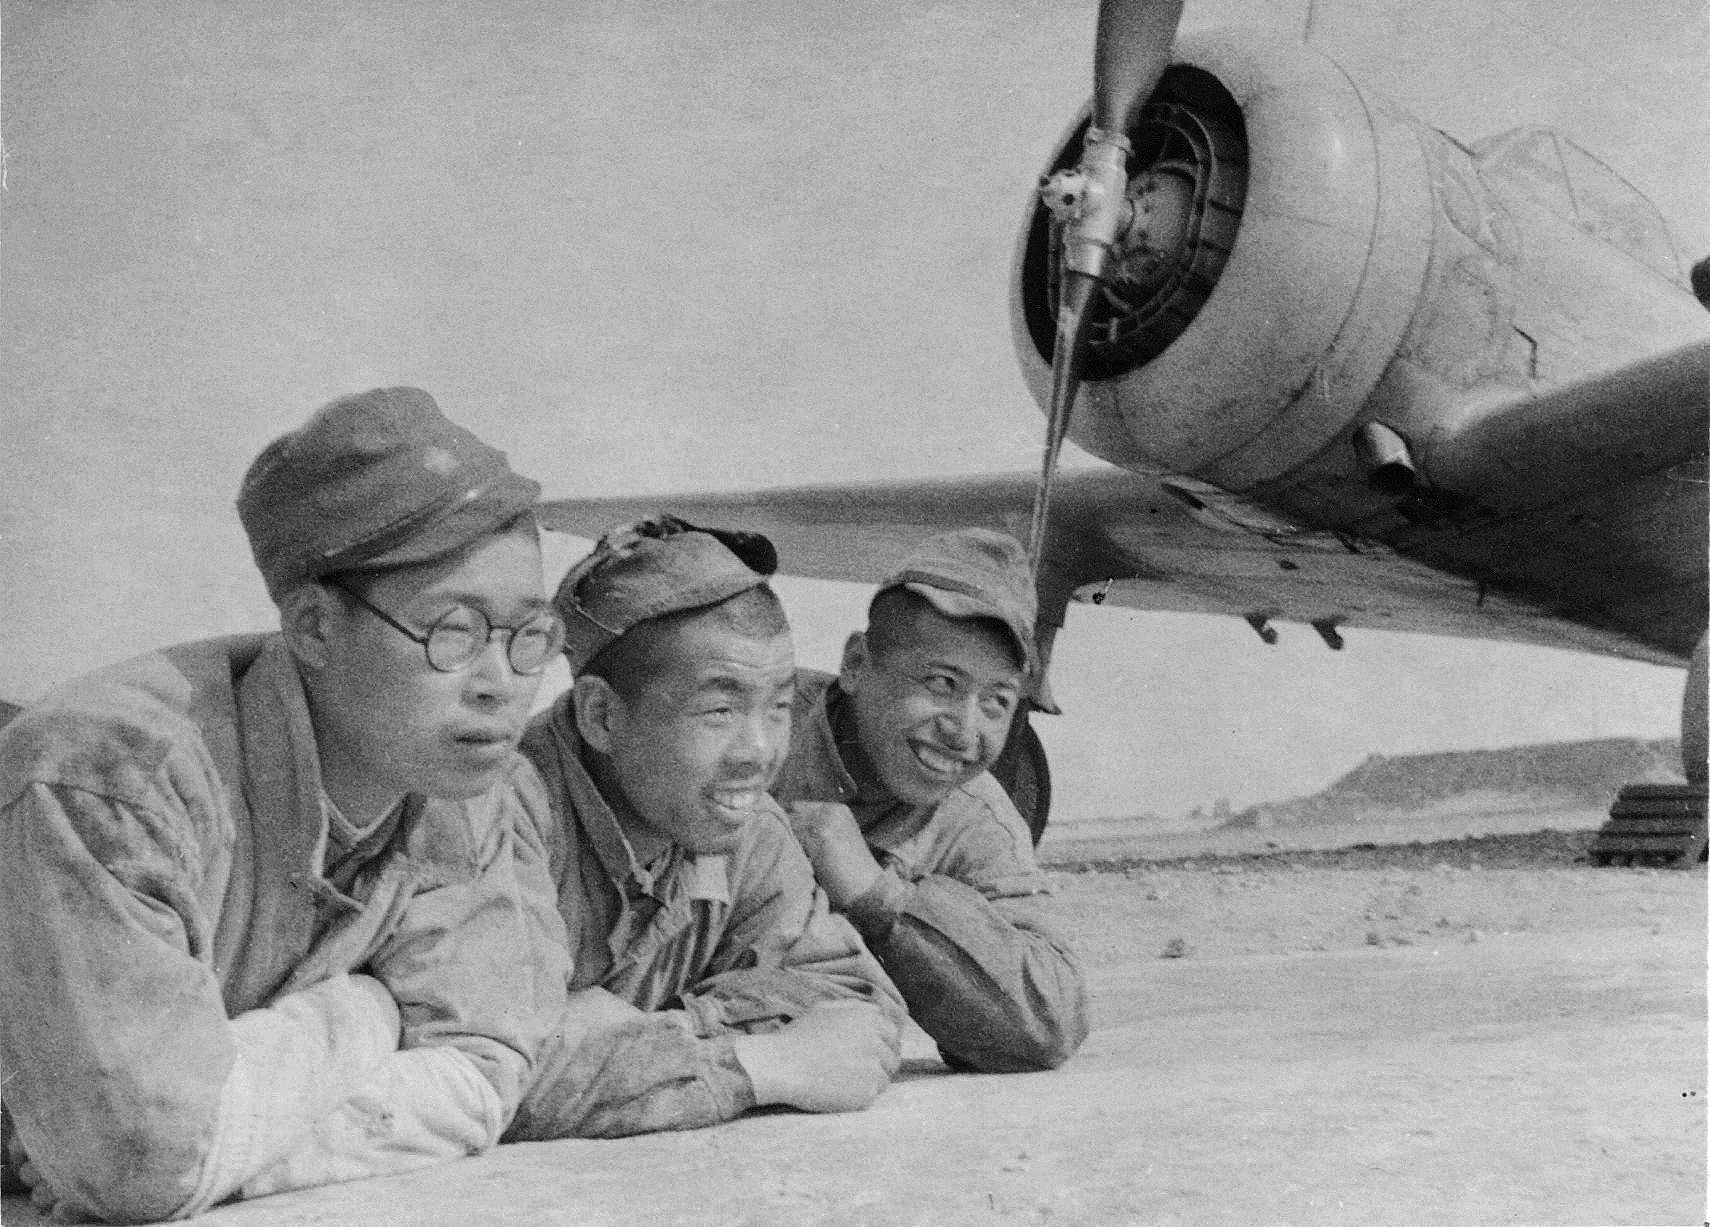 Ki-27 aircraft and personnel, Mongolia Area, China, 1939